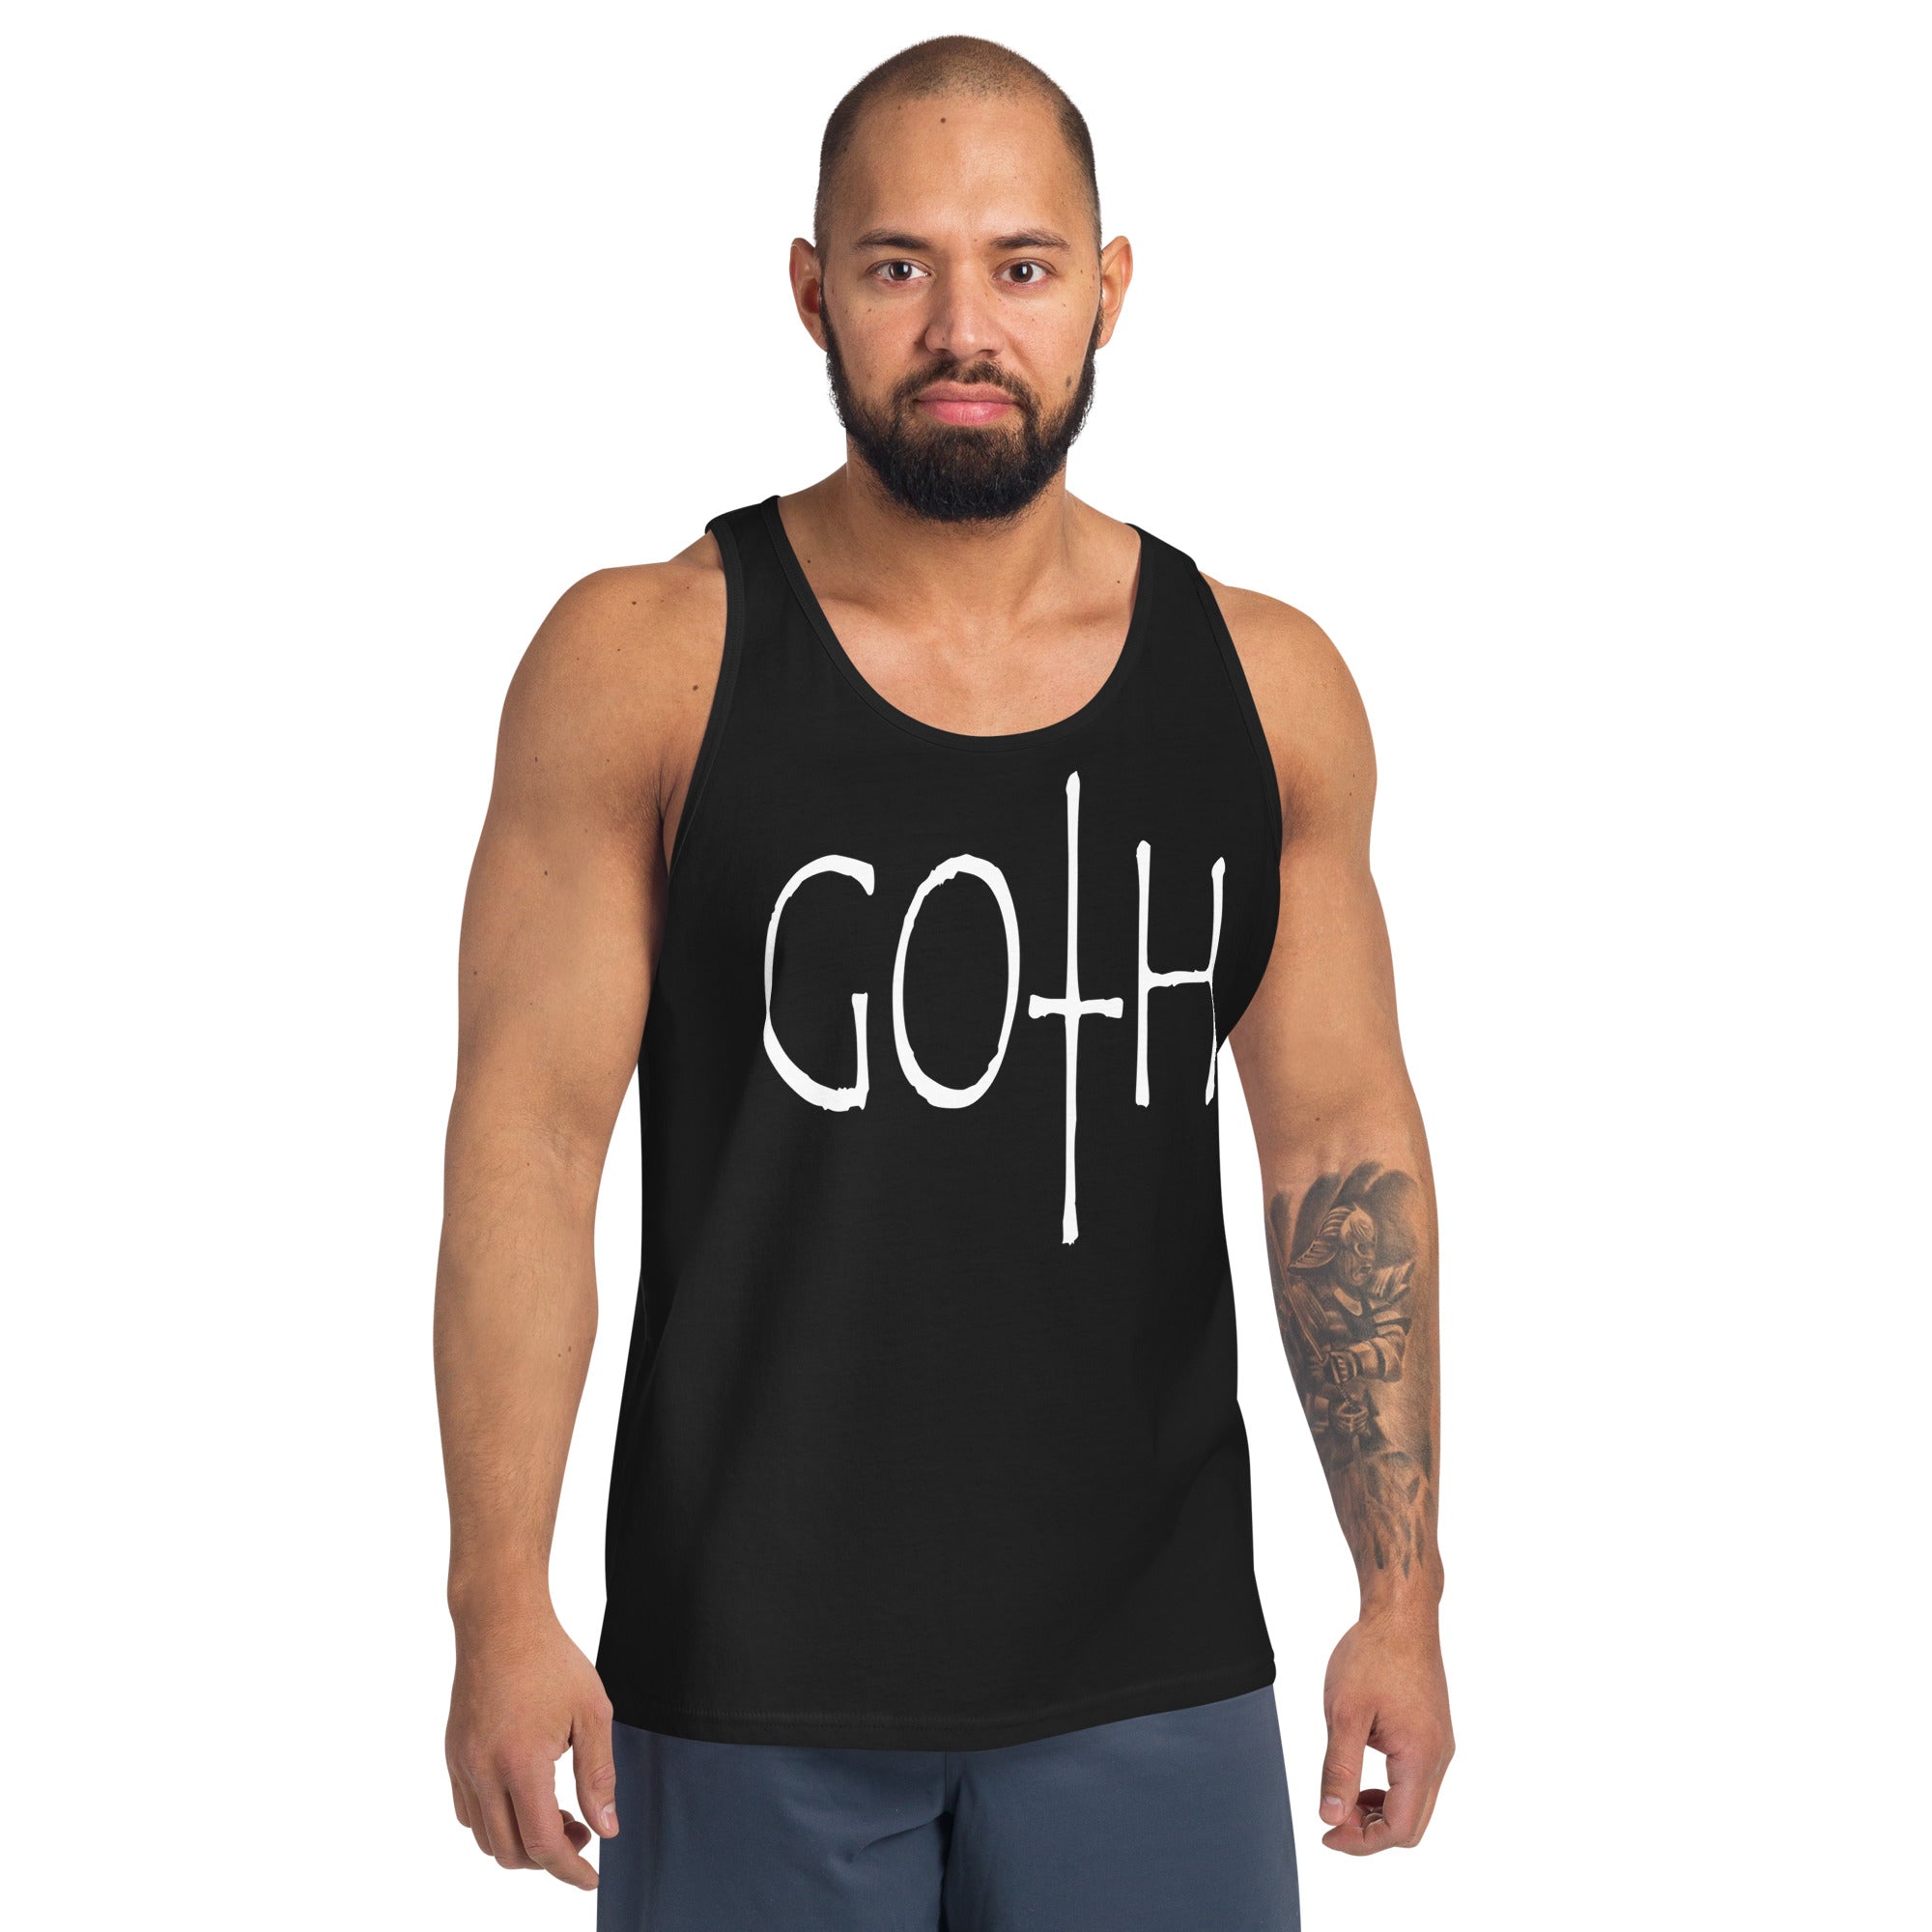 Goth Style Black Men's Tank Top Shirt - Edge of Life Designs